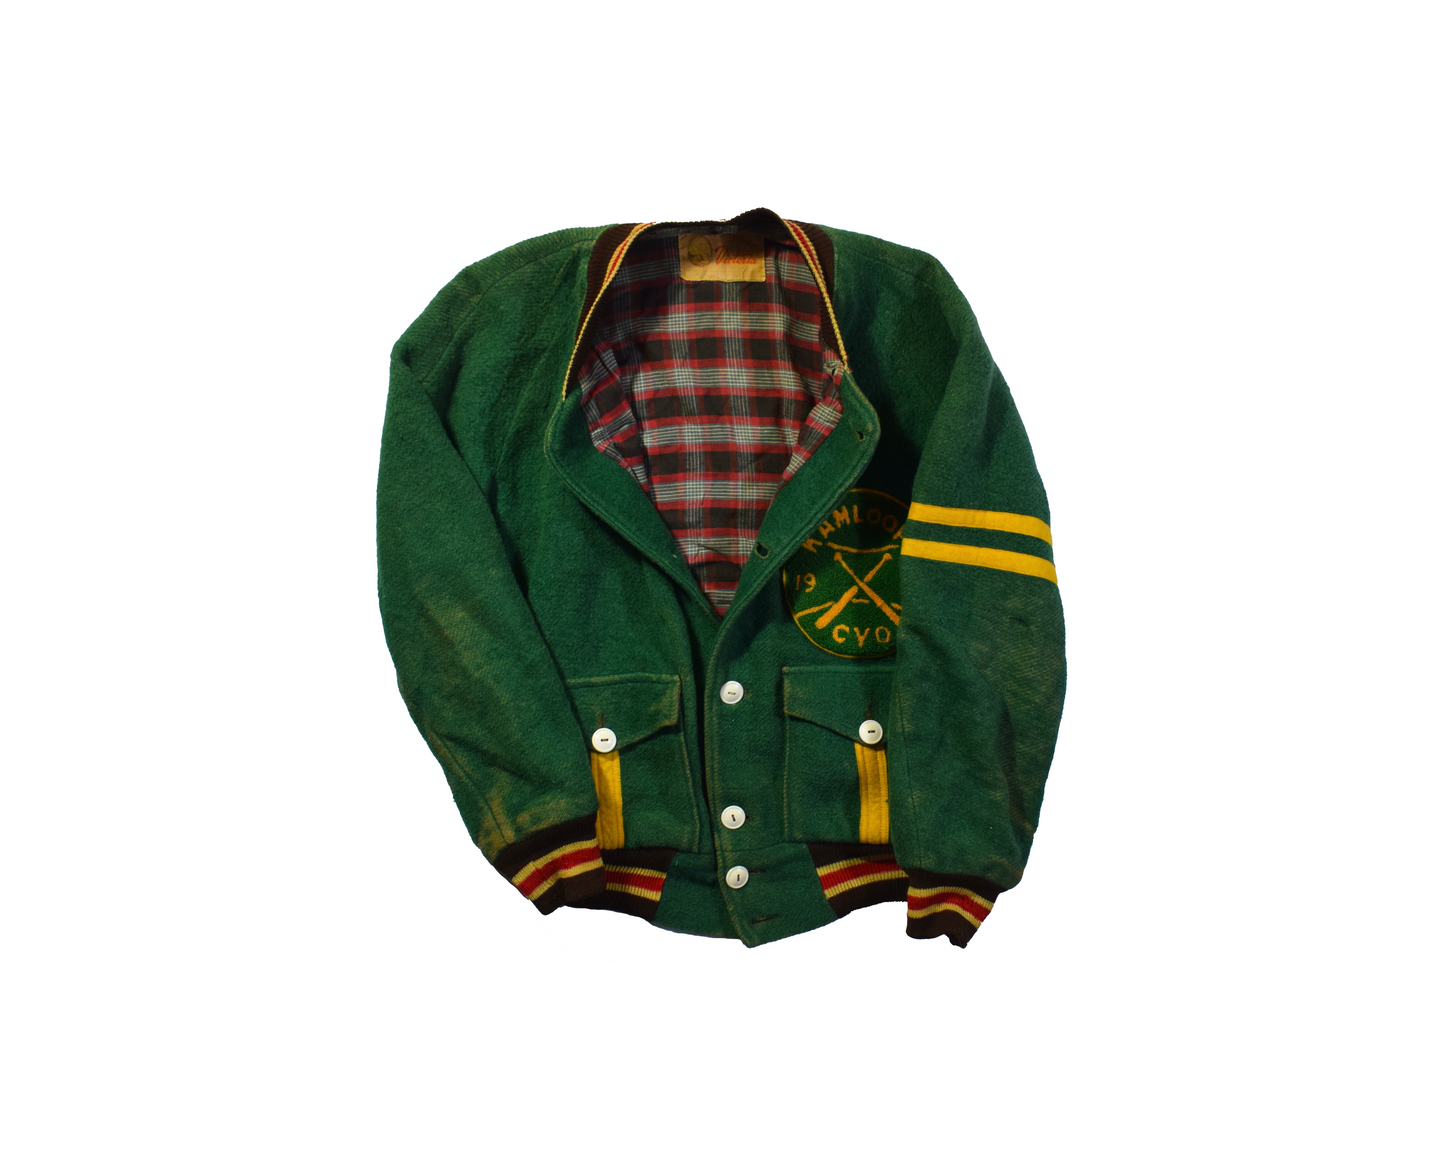 Vintage 1947 Green Victoria Jacket